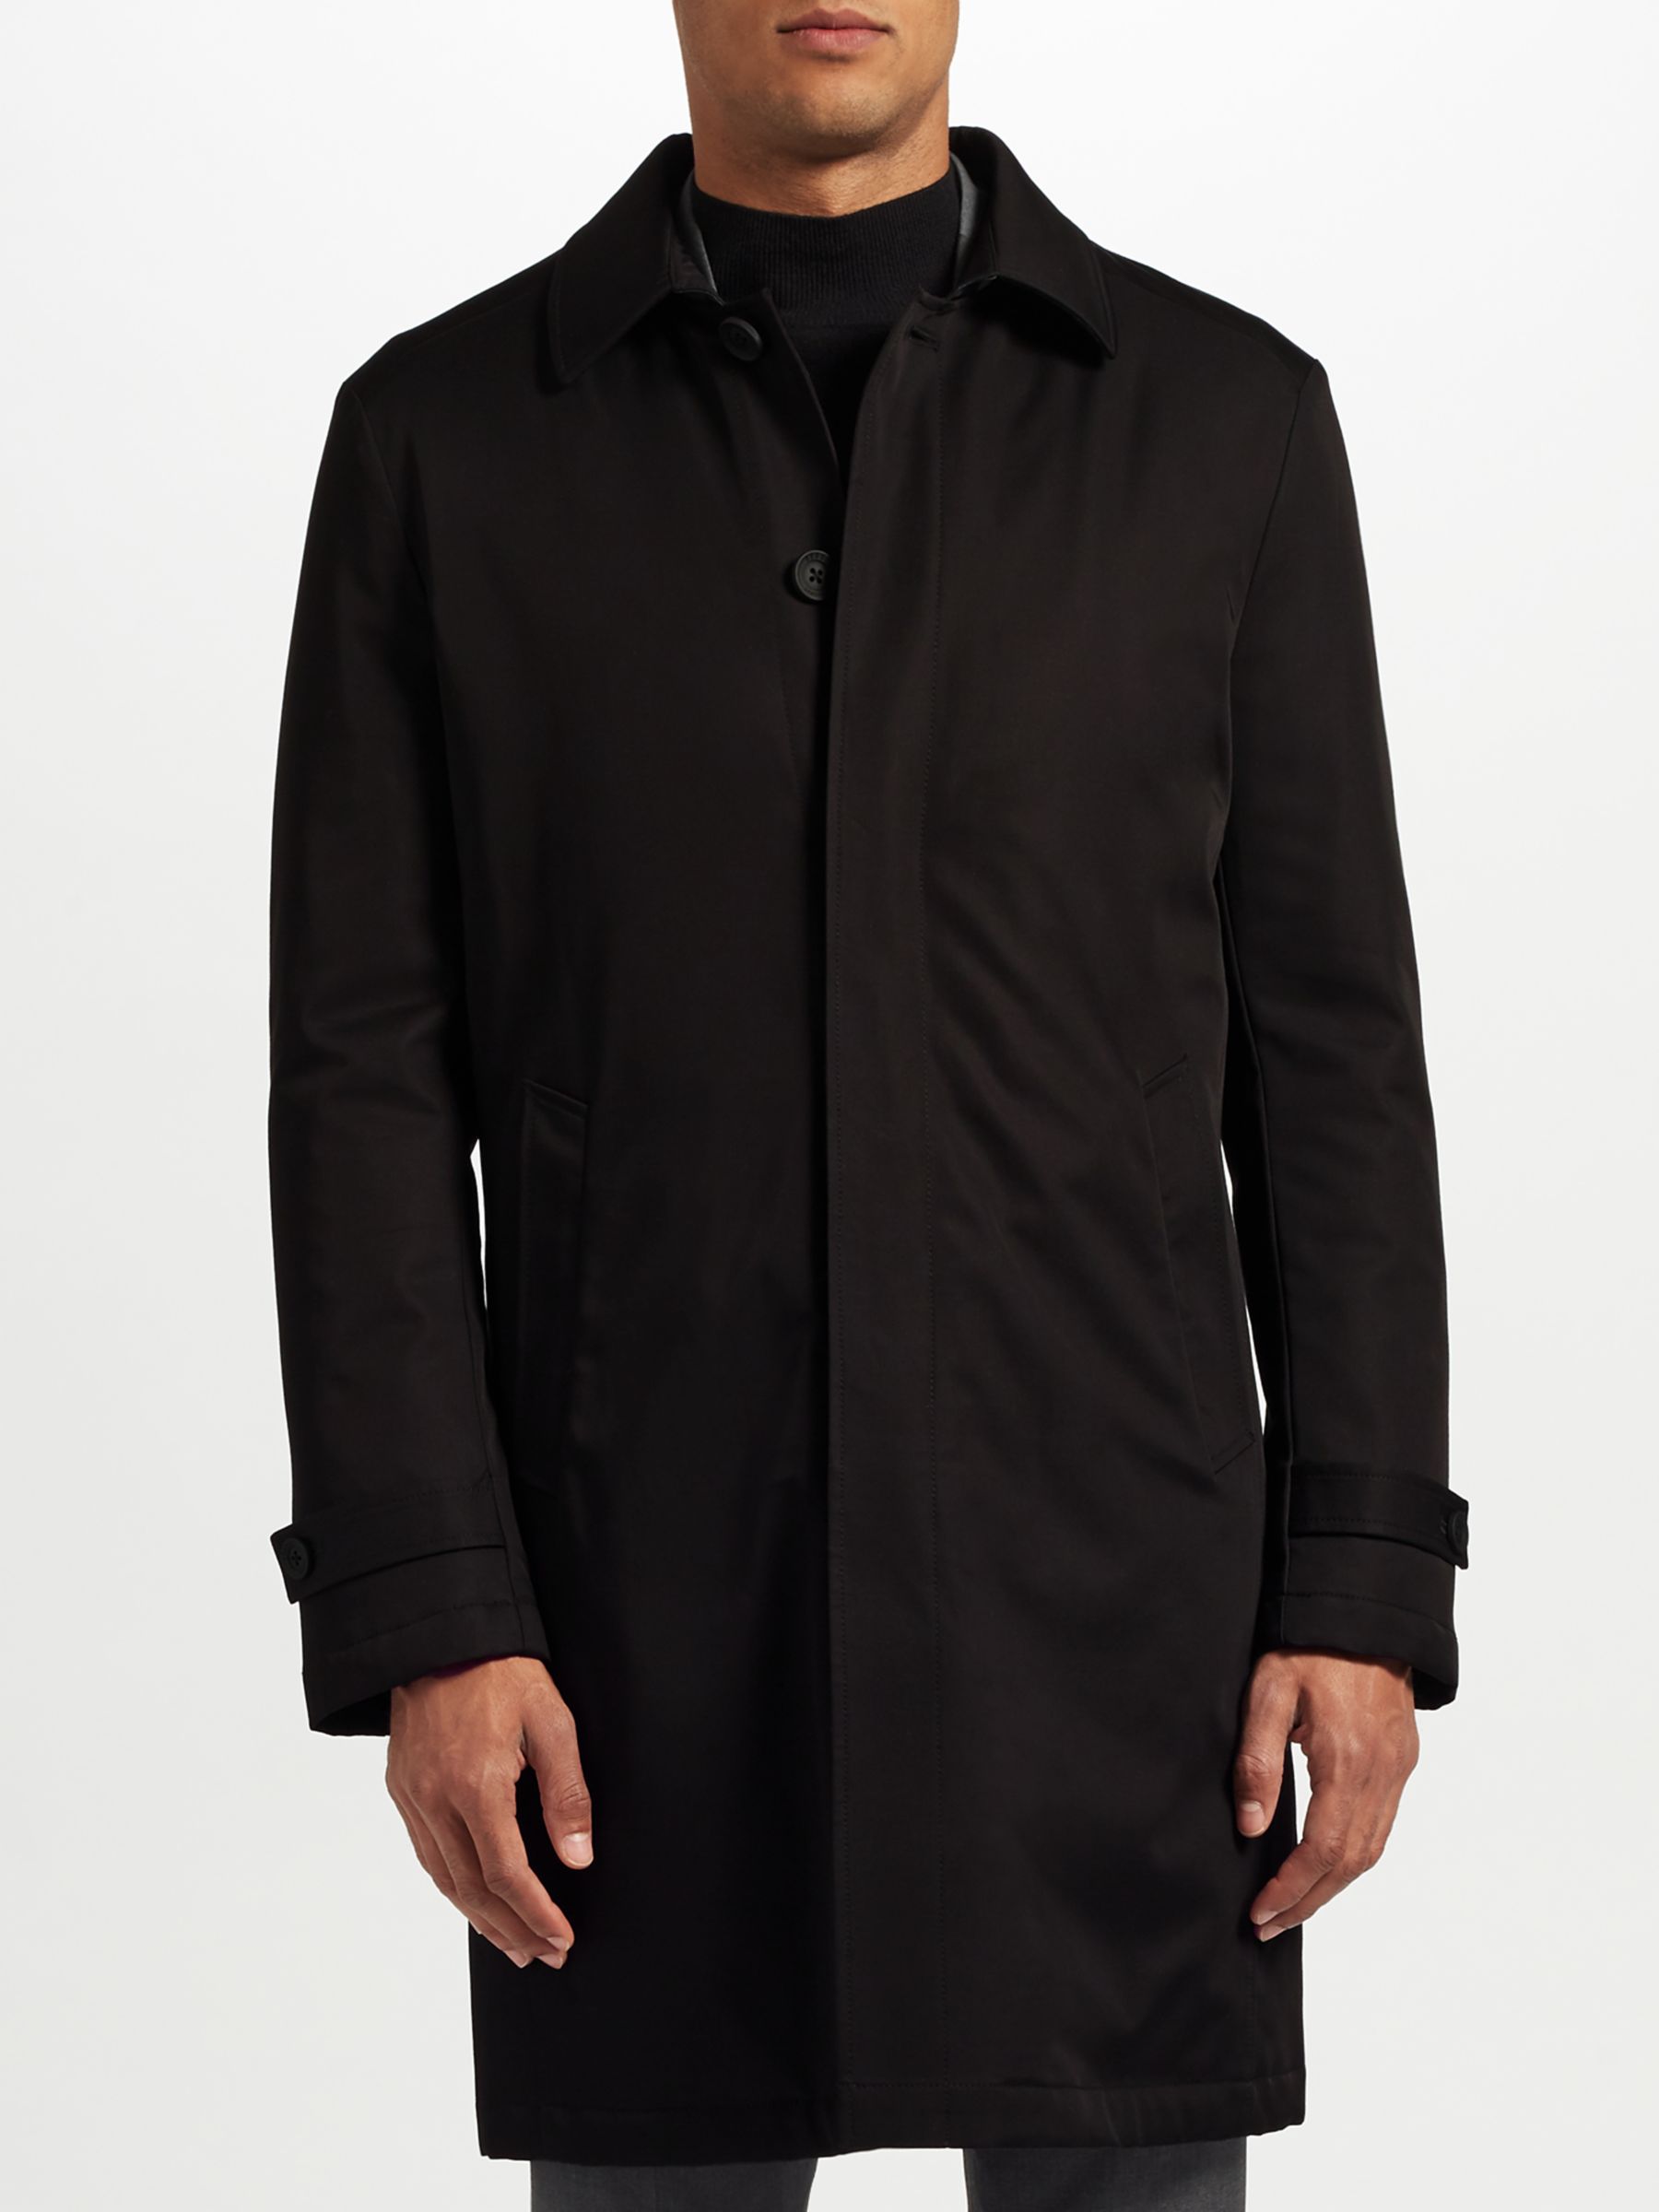 Guards London City Coat, Black, 40R